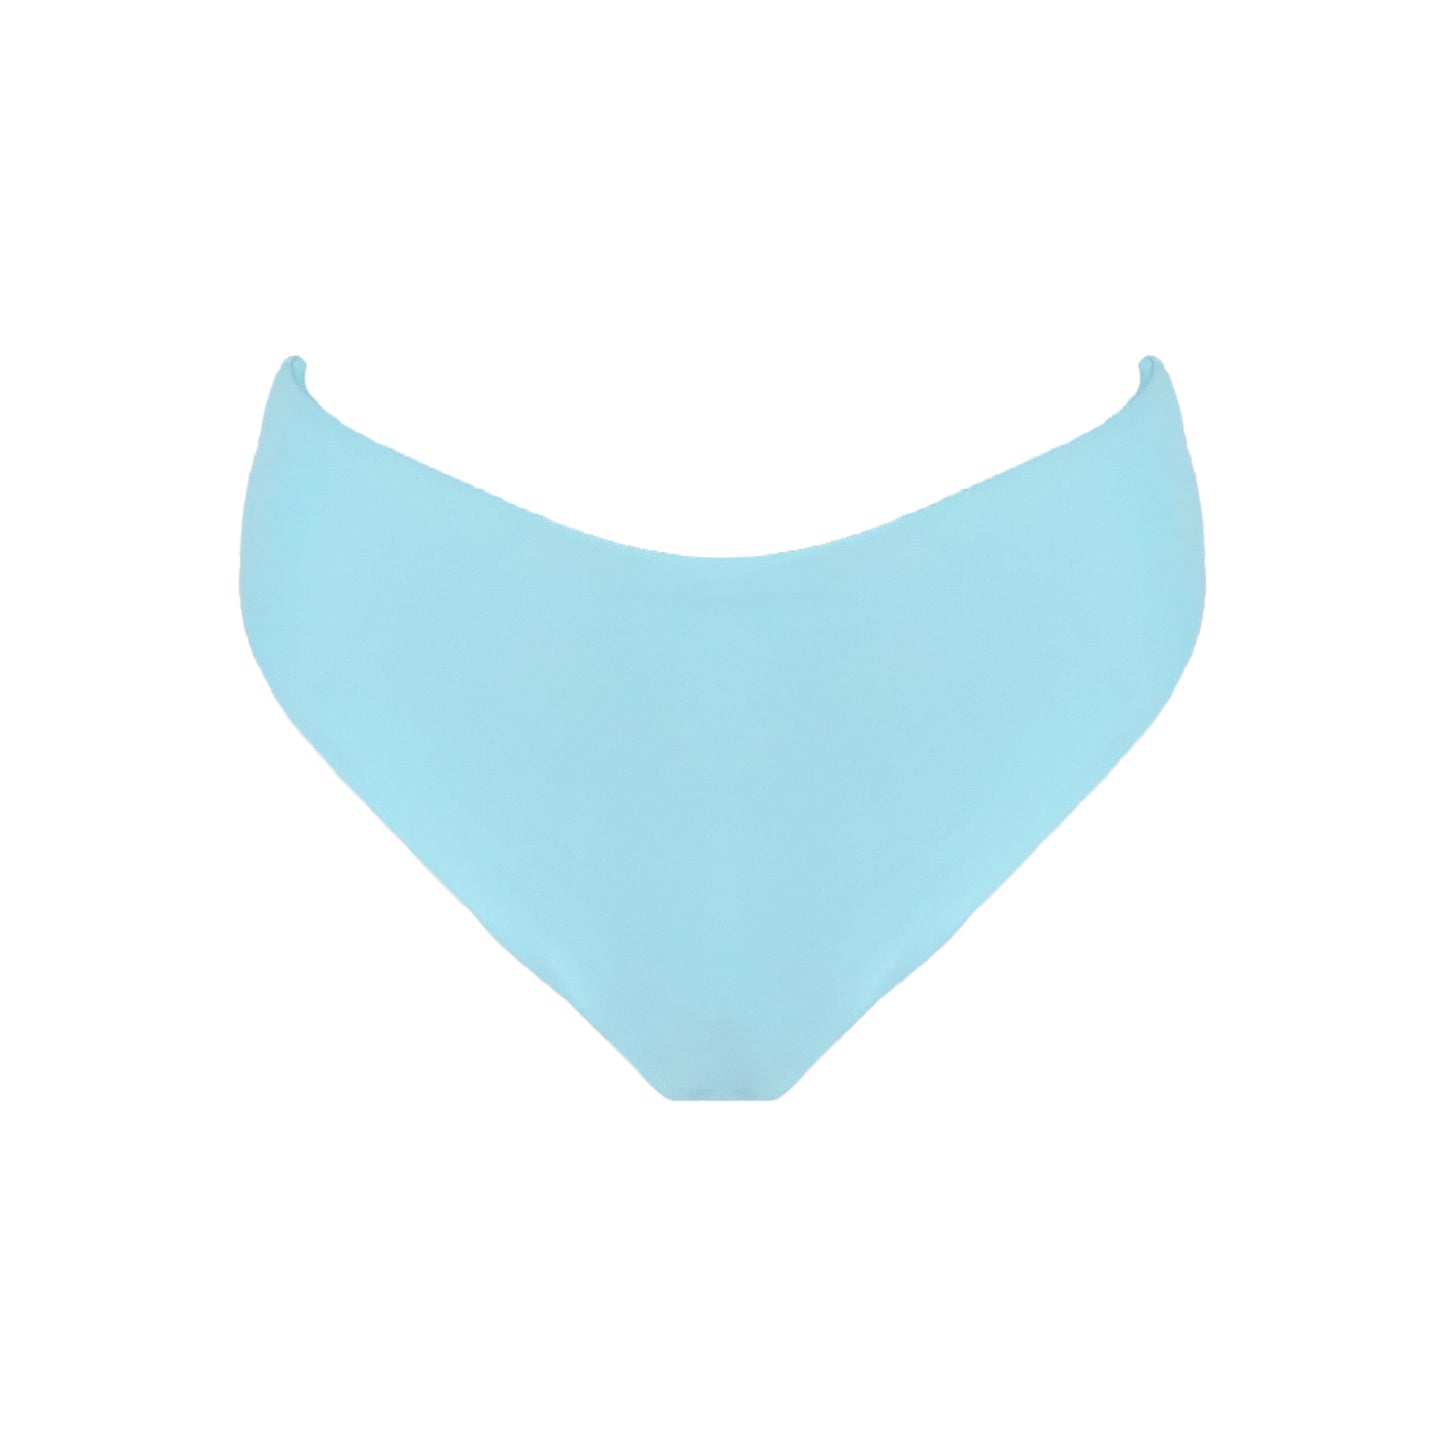 Ocean blue high waist cheeky bikini bottom with high cut legs, shapewear benefits, and full bum coverage.